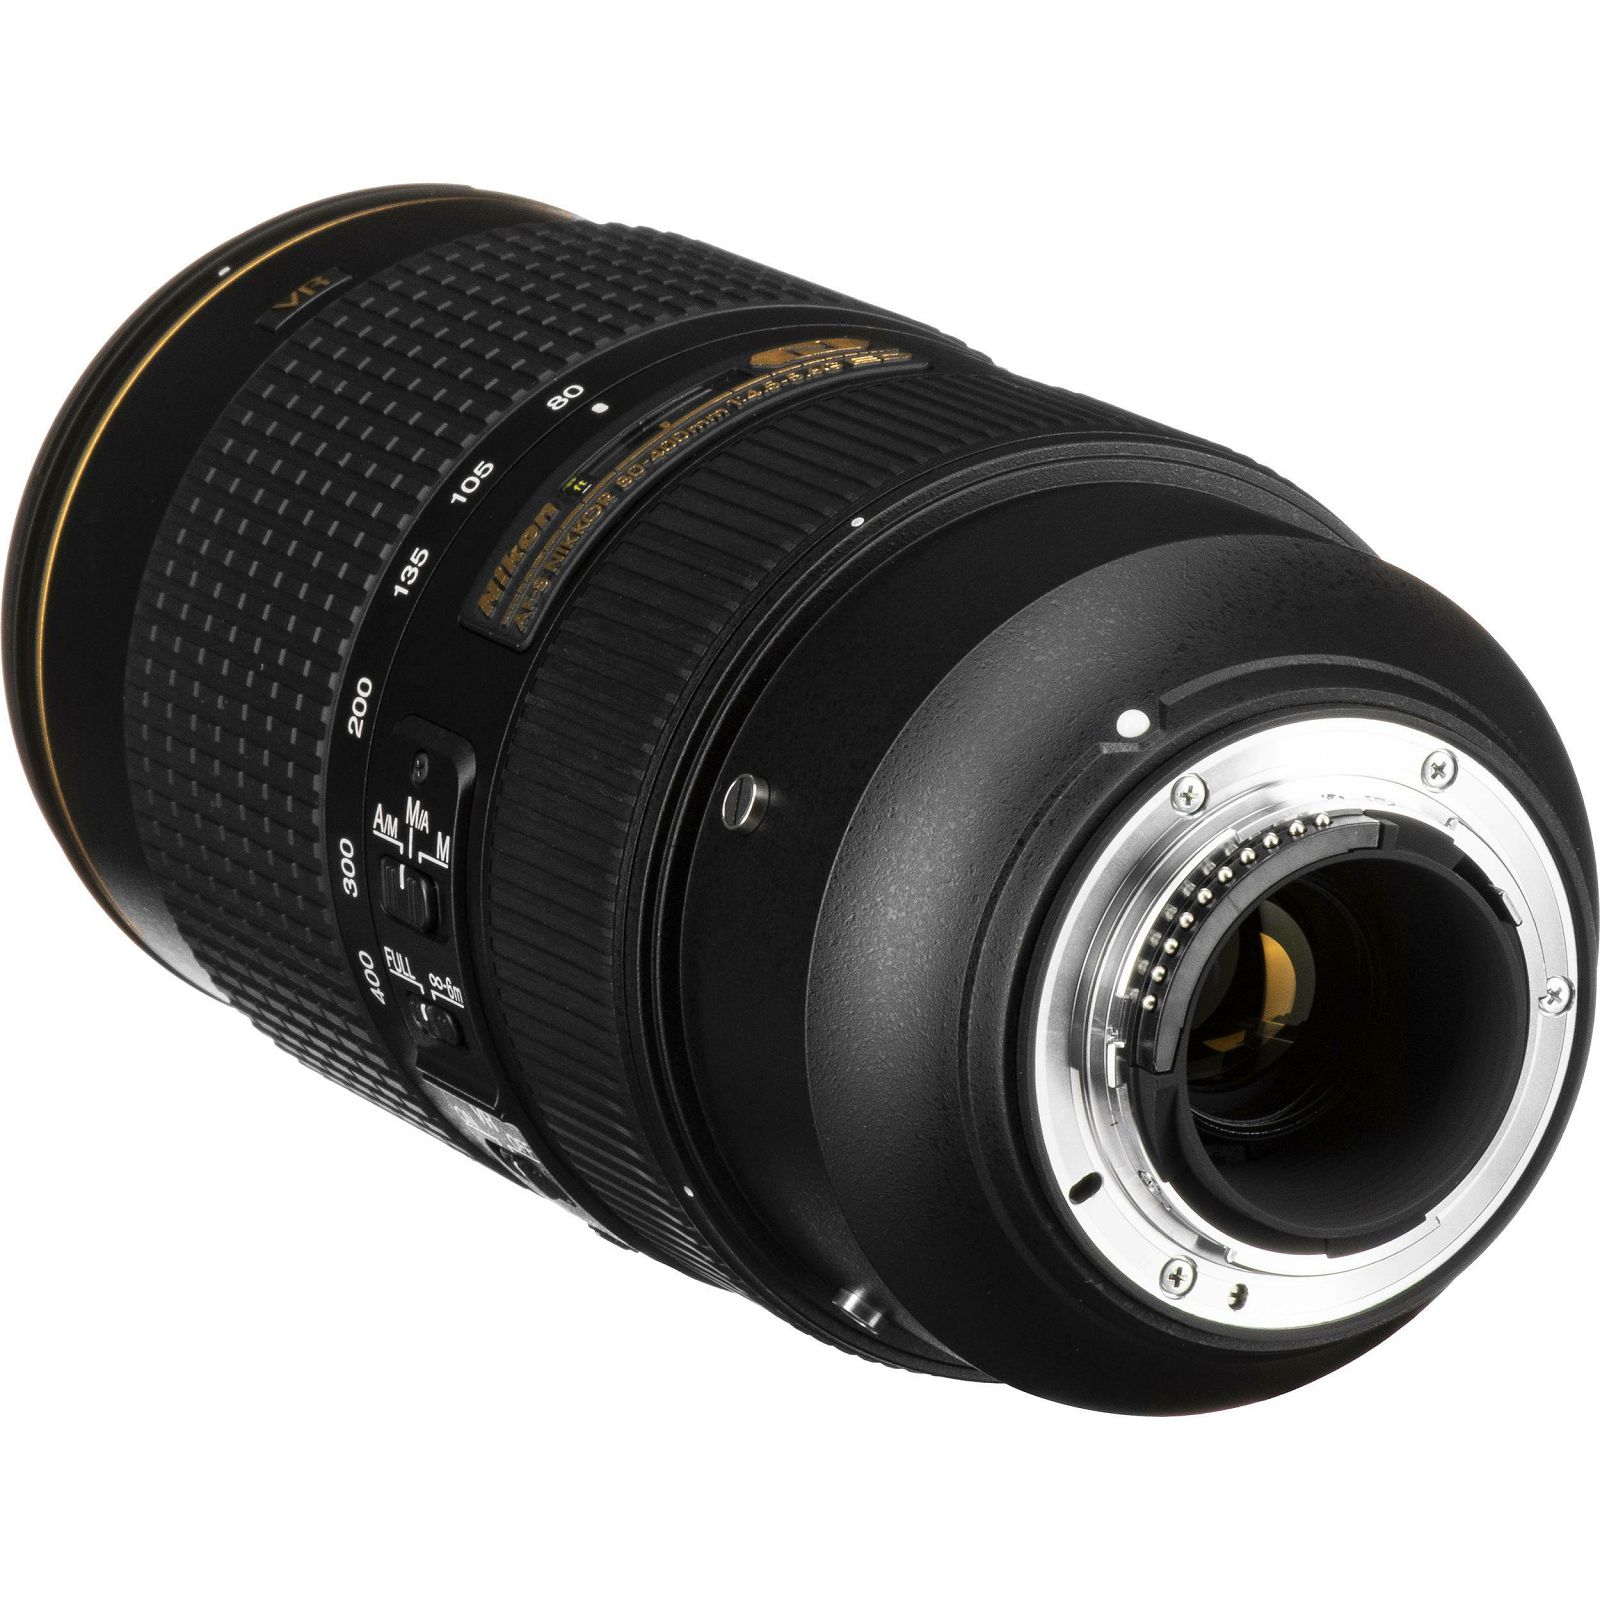 Nikon AF-S 80-400mm f/4.5-5.6G ED VR FX telefoto objektiv Nikkor 80-400 4.5-5.6 G auto focus zoom lens (JAA817EA)